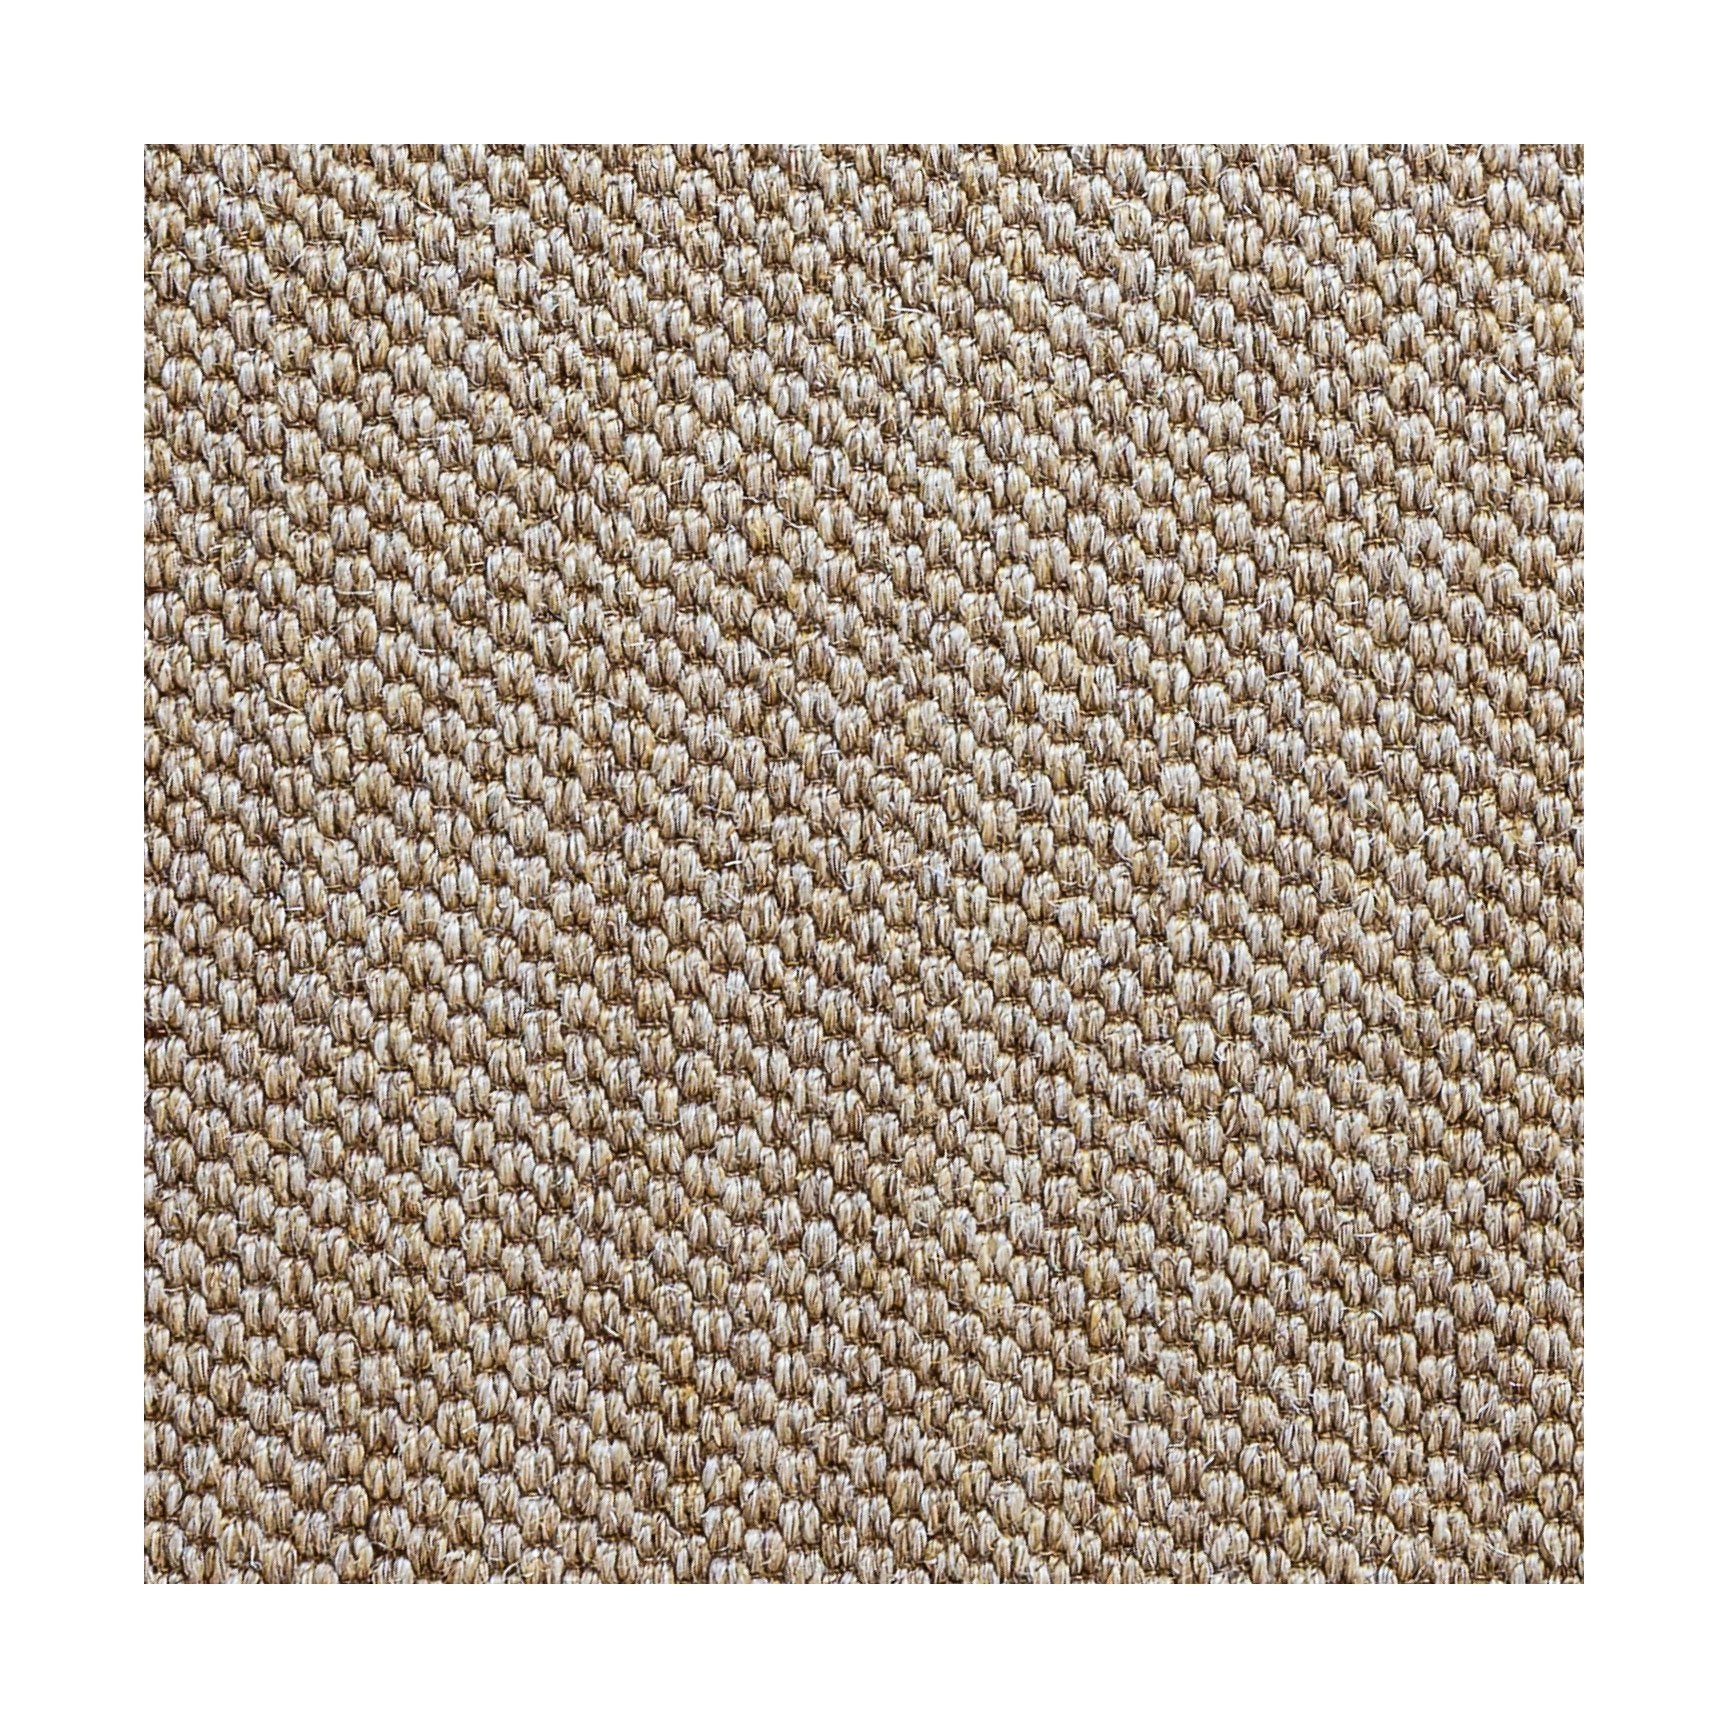 Massimo Belize -mattan 160x240, naturlig brun